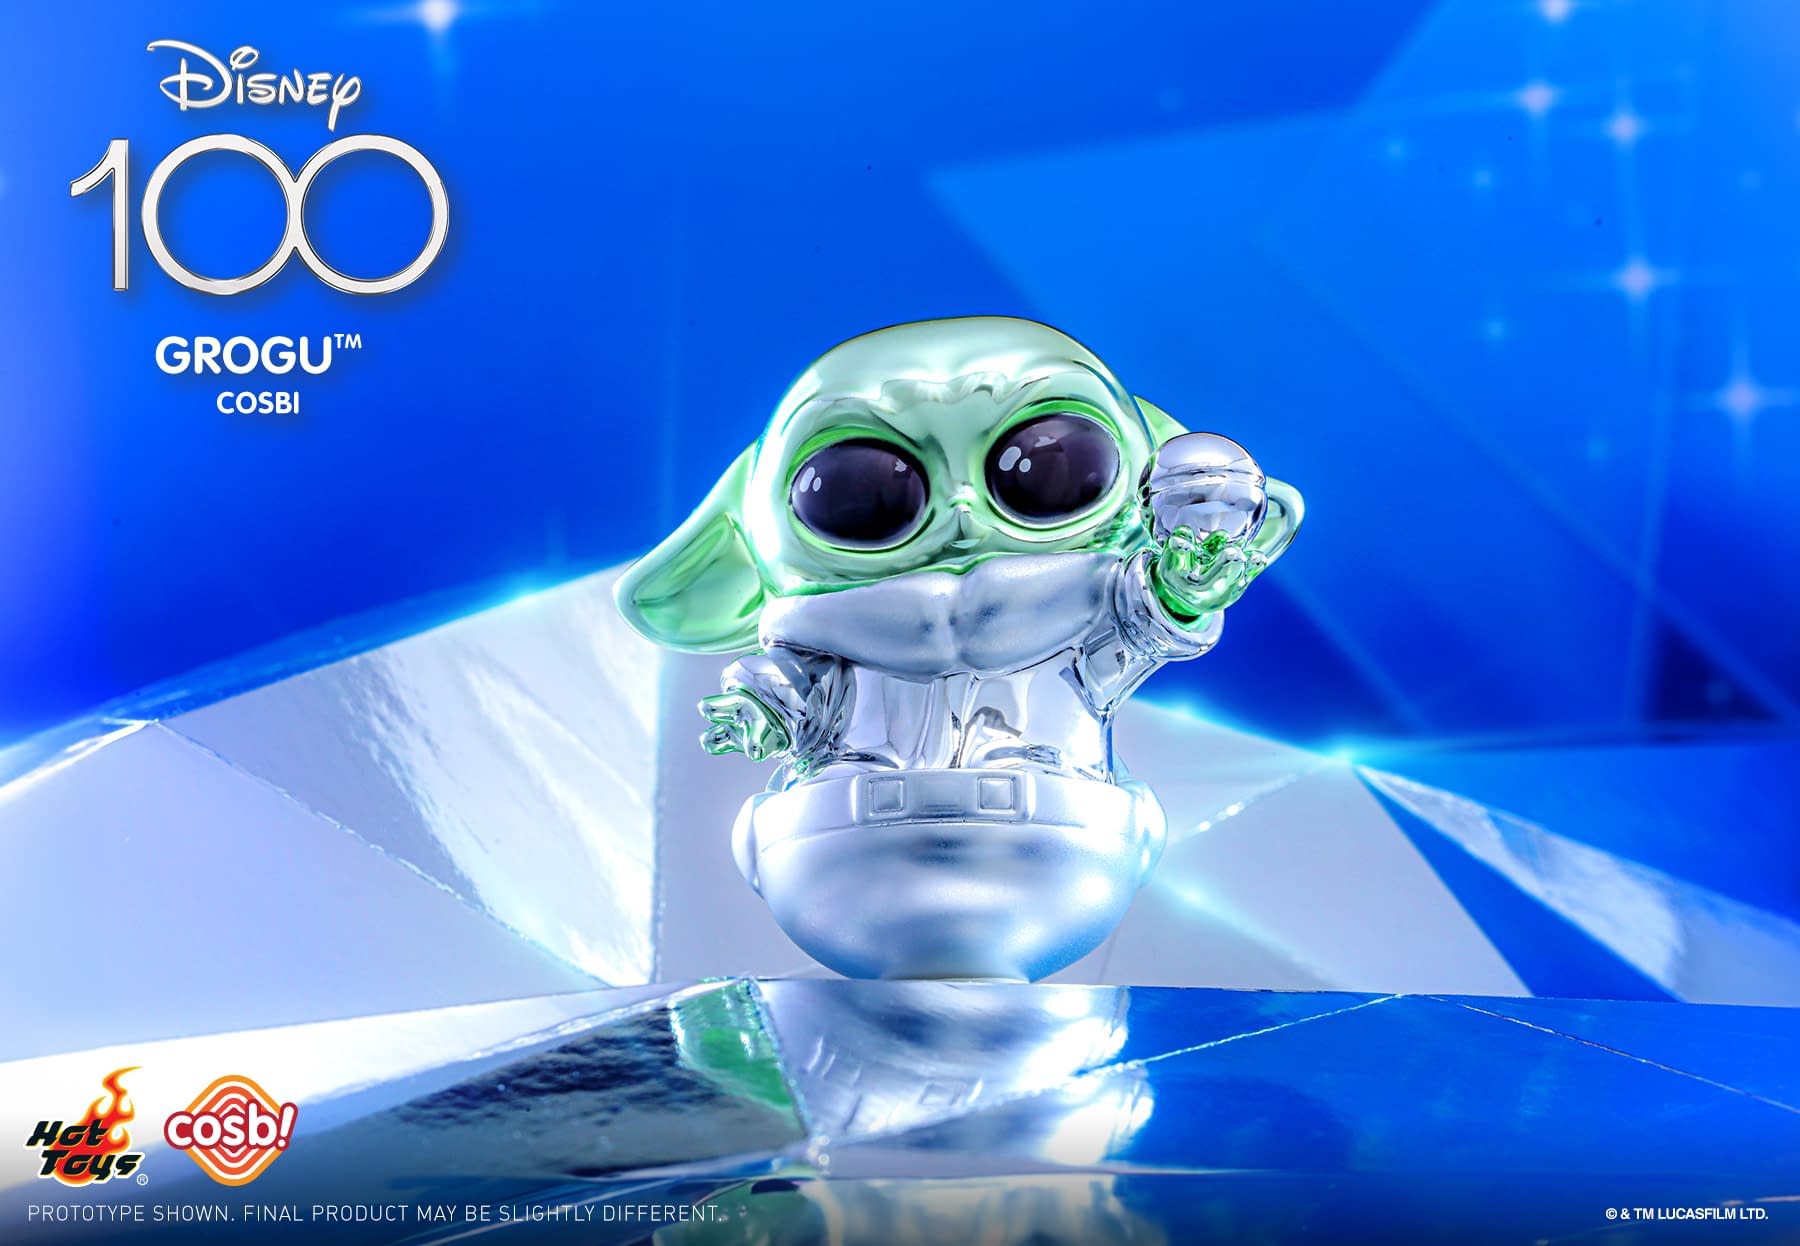 Hot Toys Unveils New Disney 100 Platinum Color Cosbi Collection4